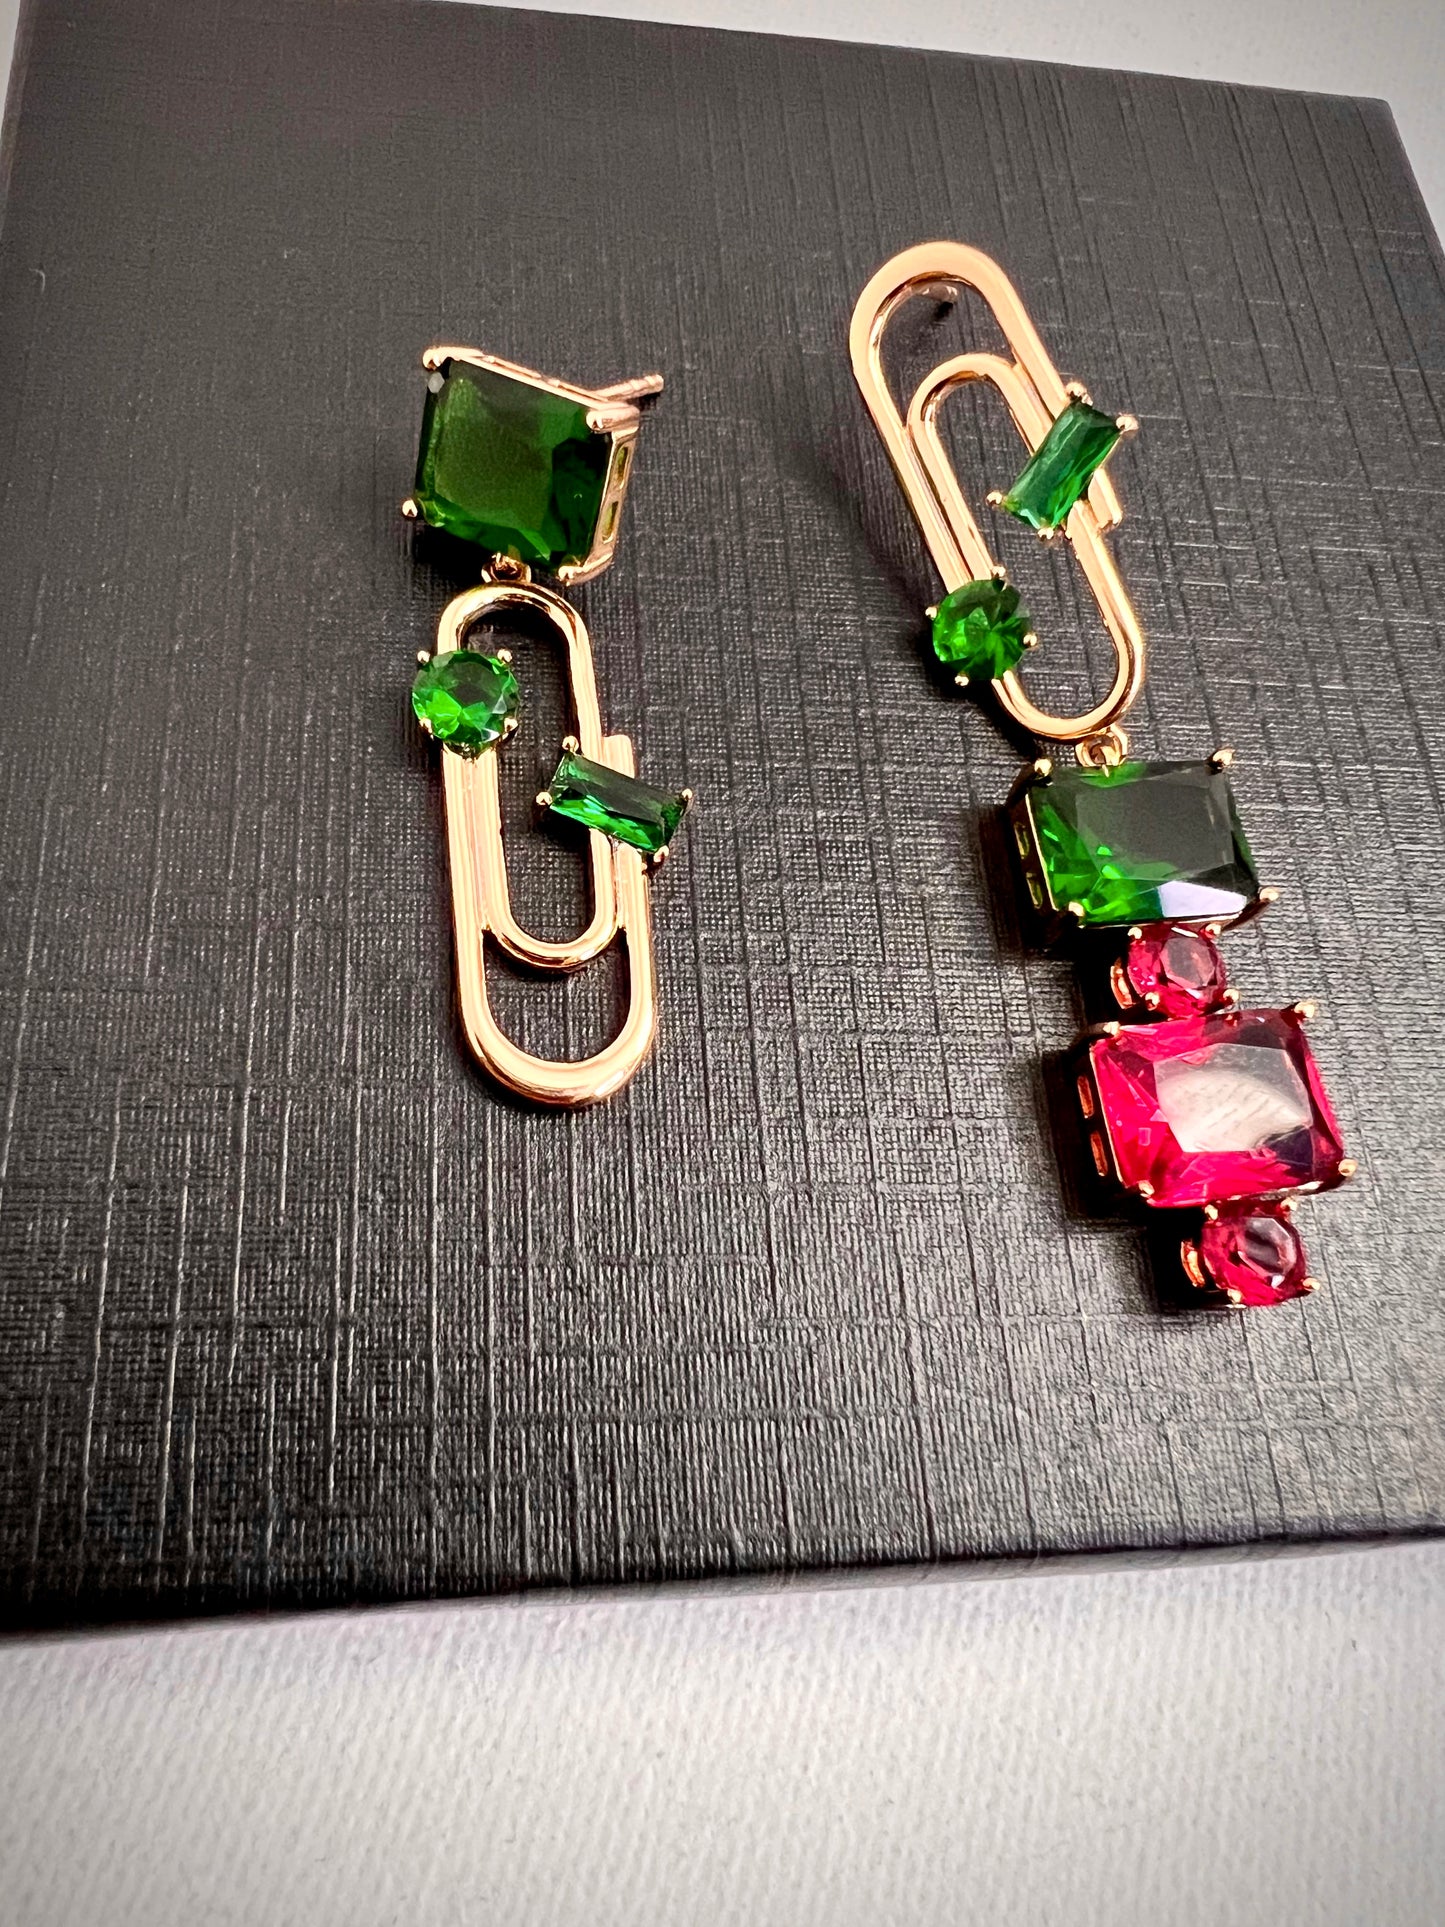 Paper clip Design Earrings Green & Ruby